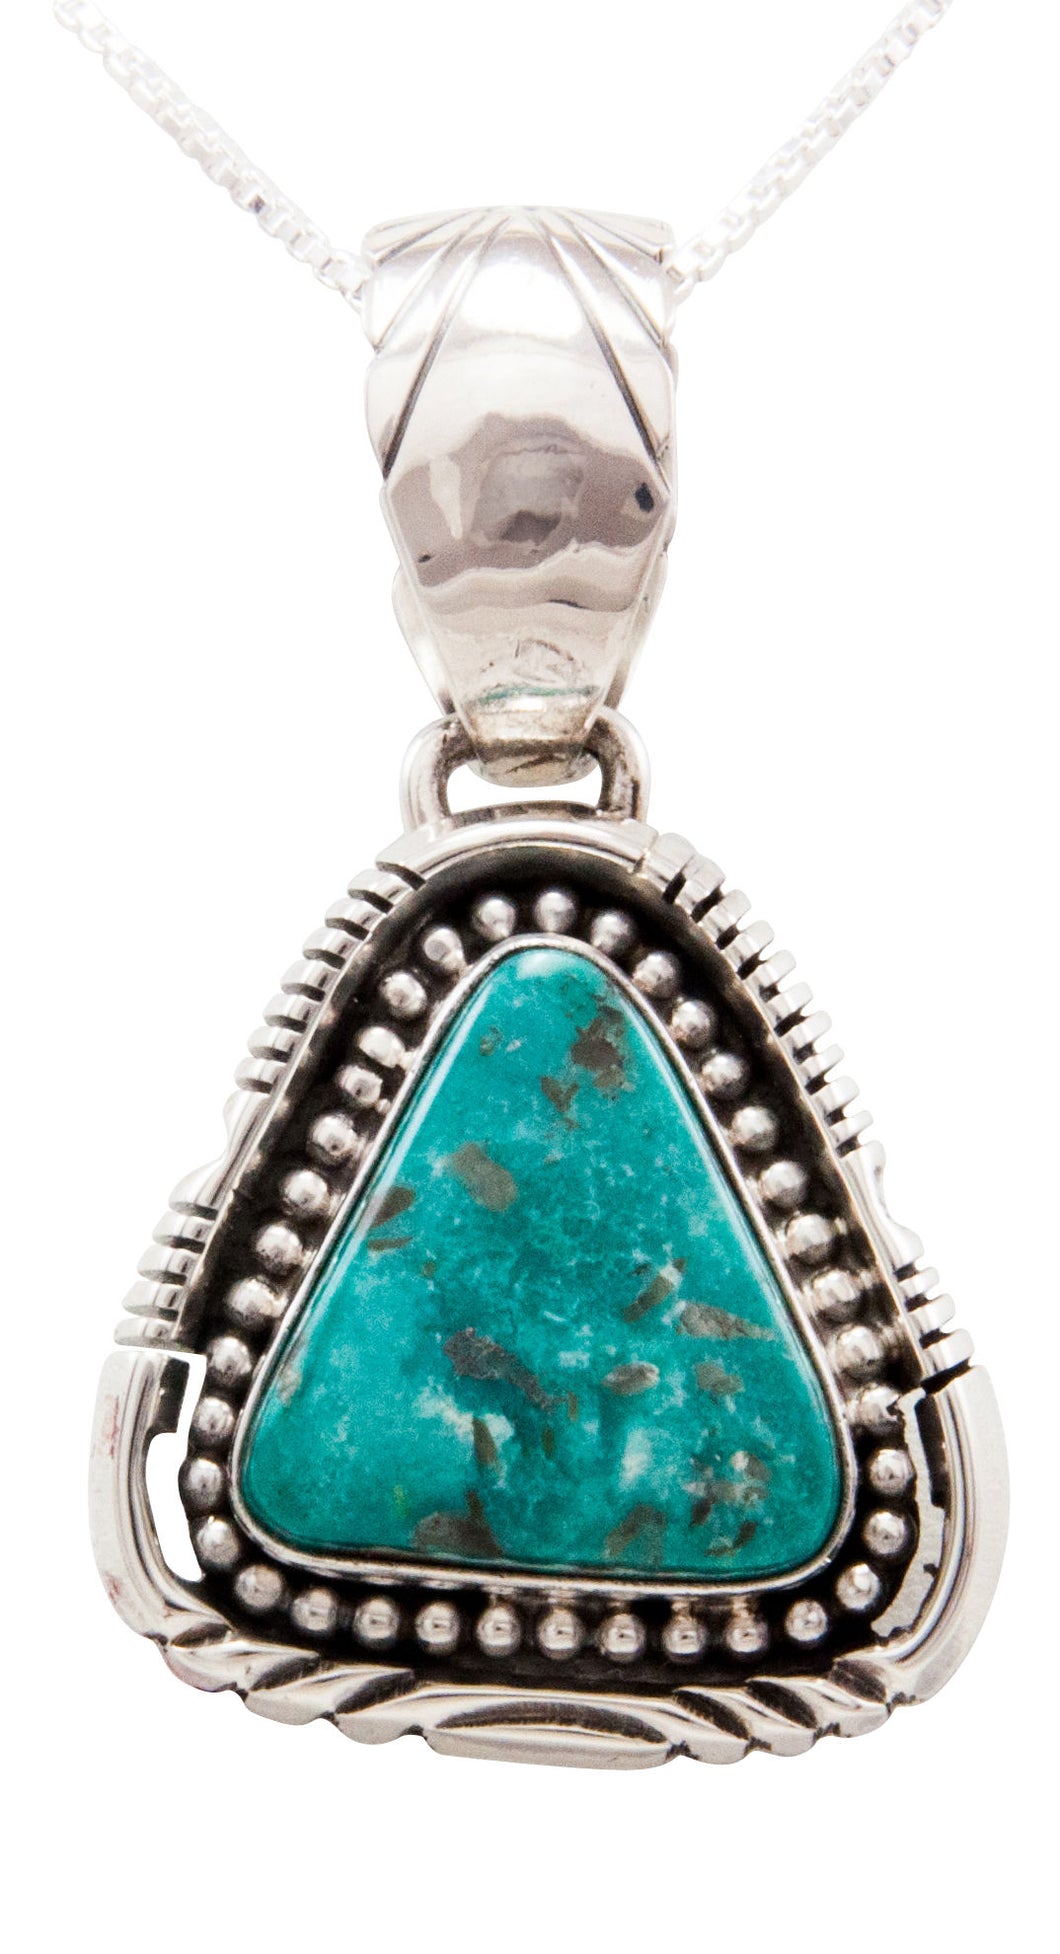 Navajo Native American Kingman Turquoise Pendant Necklace by Spencer SKU232509